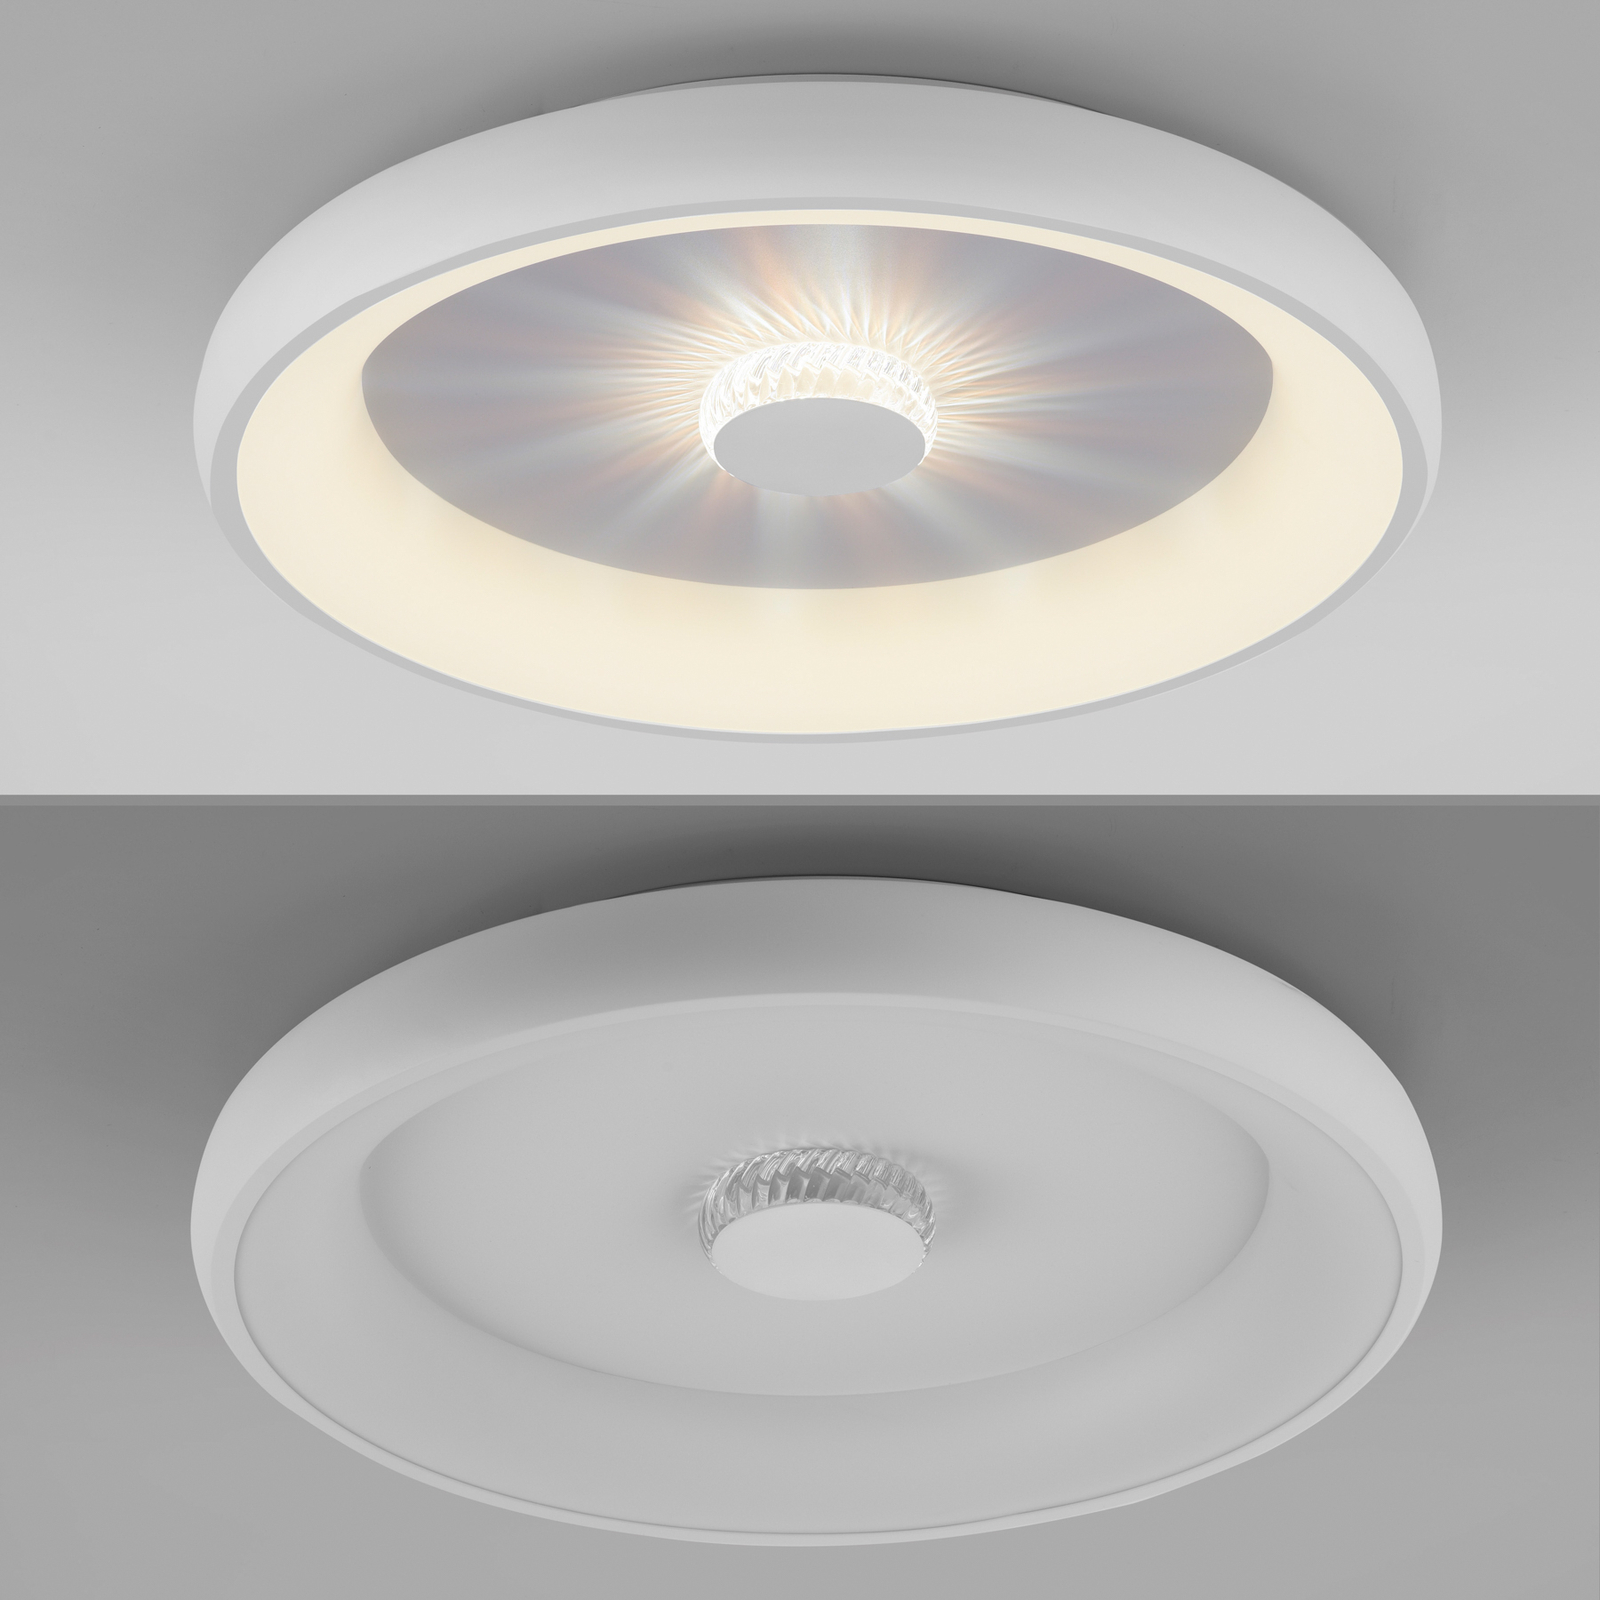 Stropní svítidlo Vertigo LED, CCT, Ø 61,5 cm, bílé